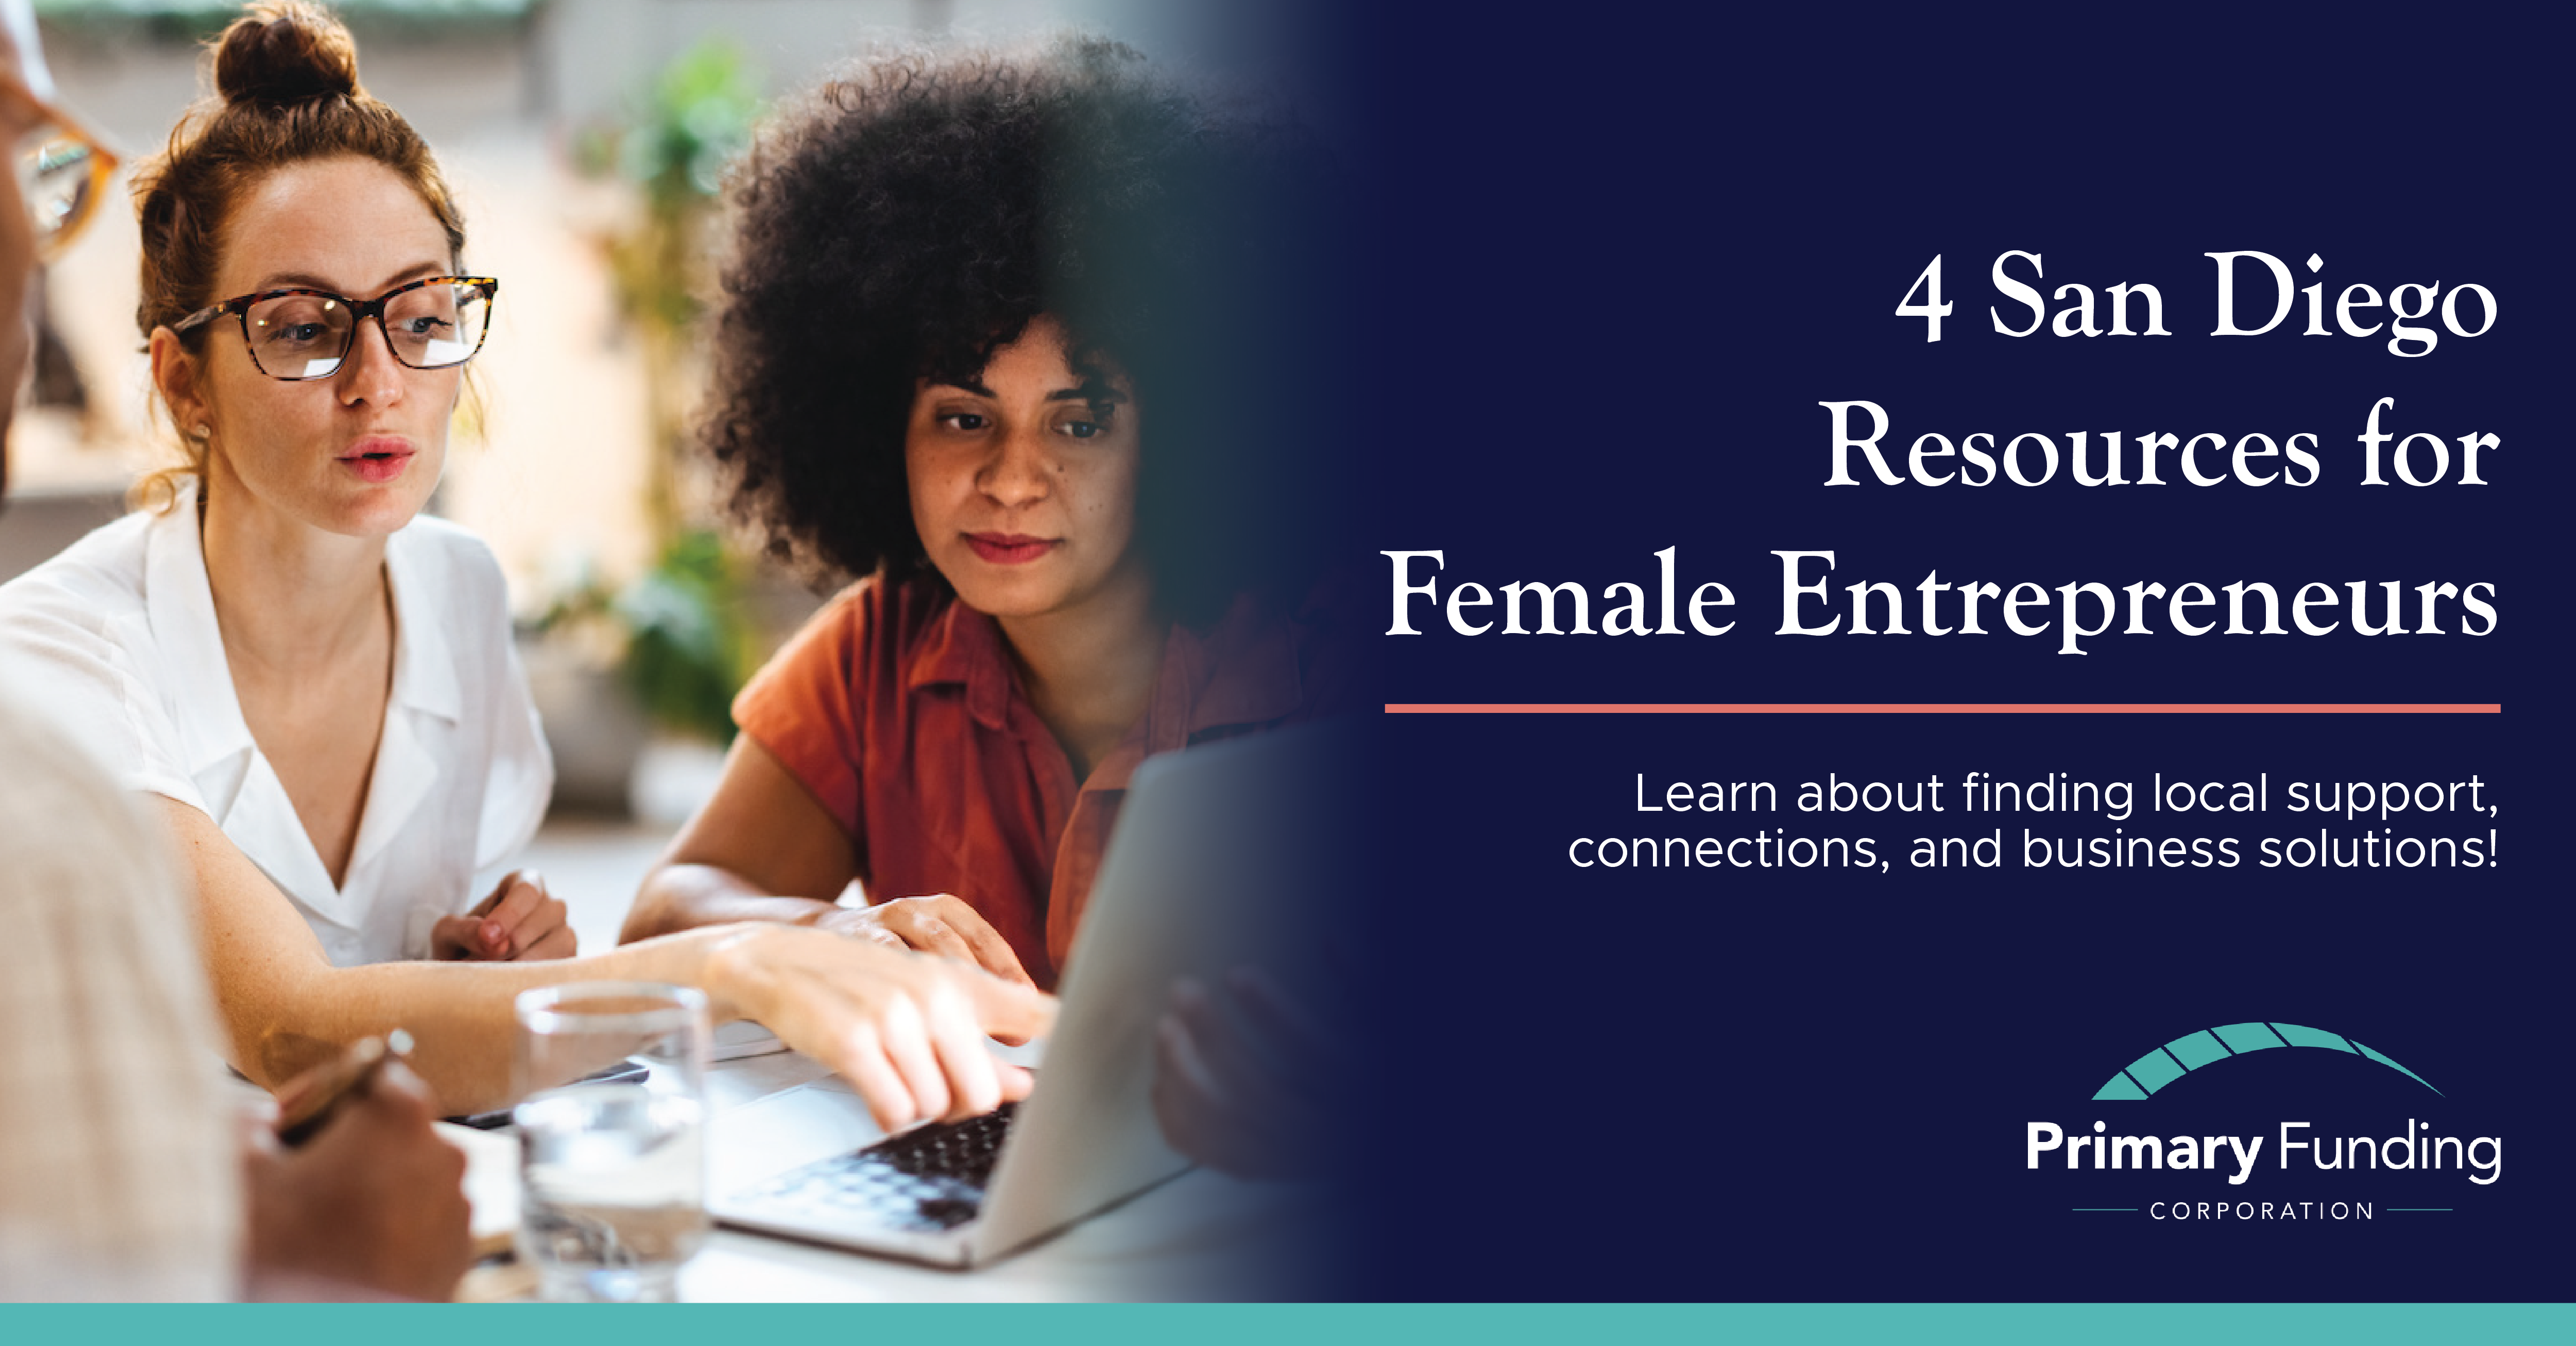 4 San Diego Resources for Female Entrepreneurs post image